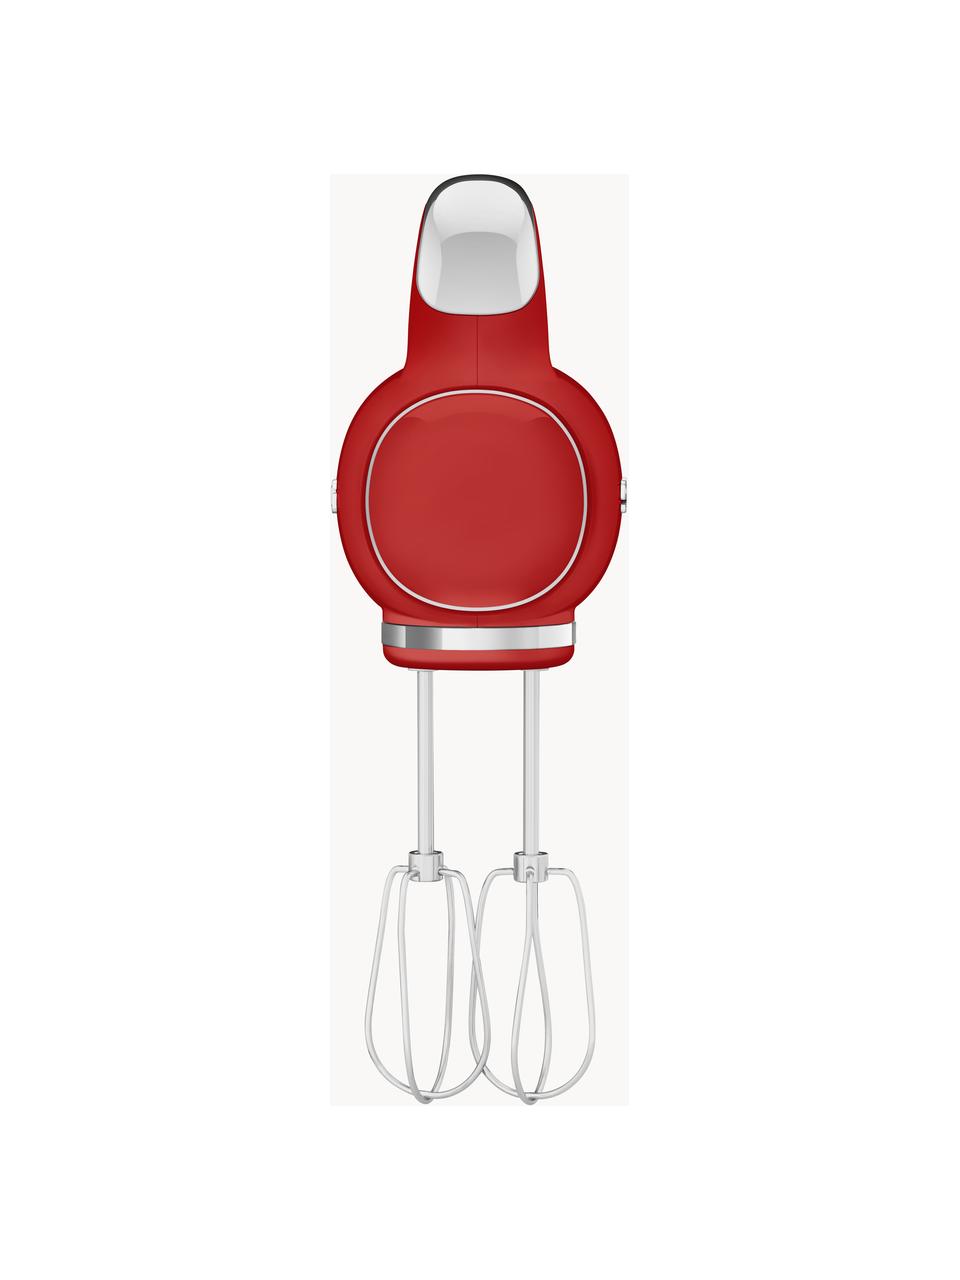 Handrührgerät 50's Style, Gehäuse: Aluminium und Kunststoff,, Rot, glänzend, B 22 x H 22 cm